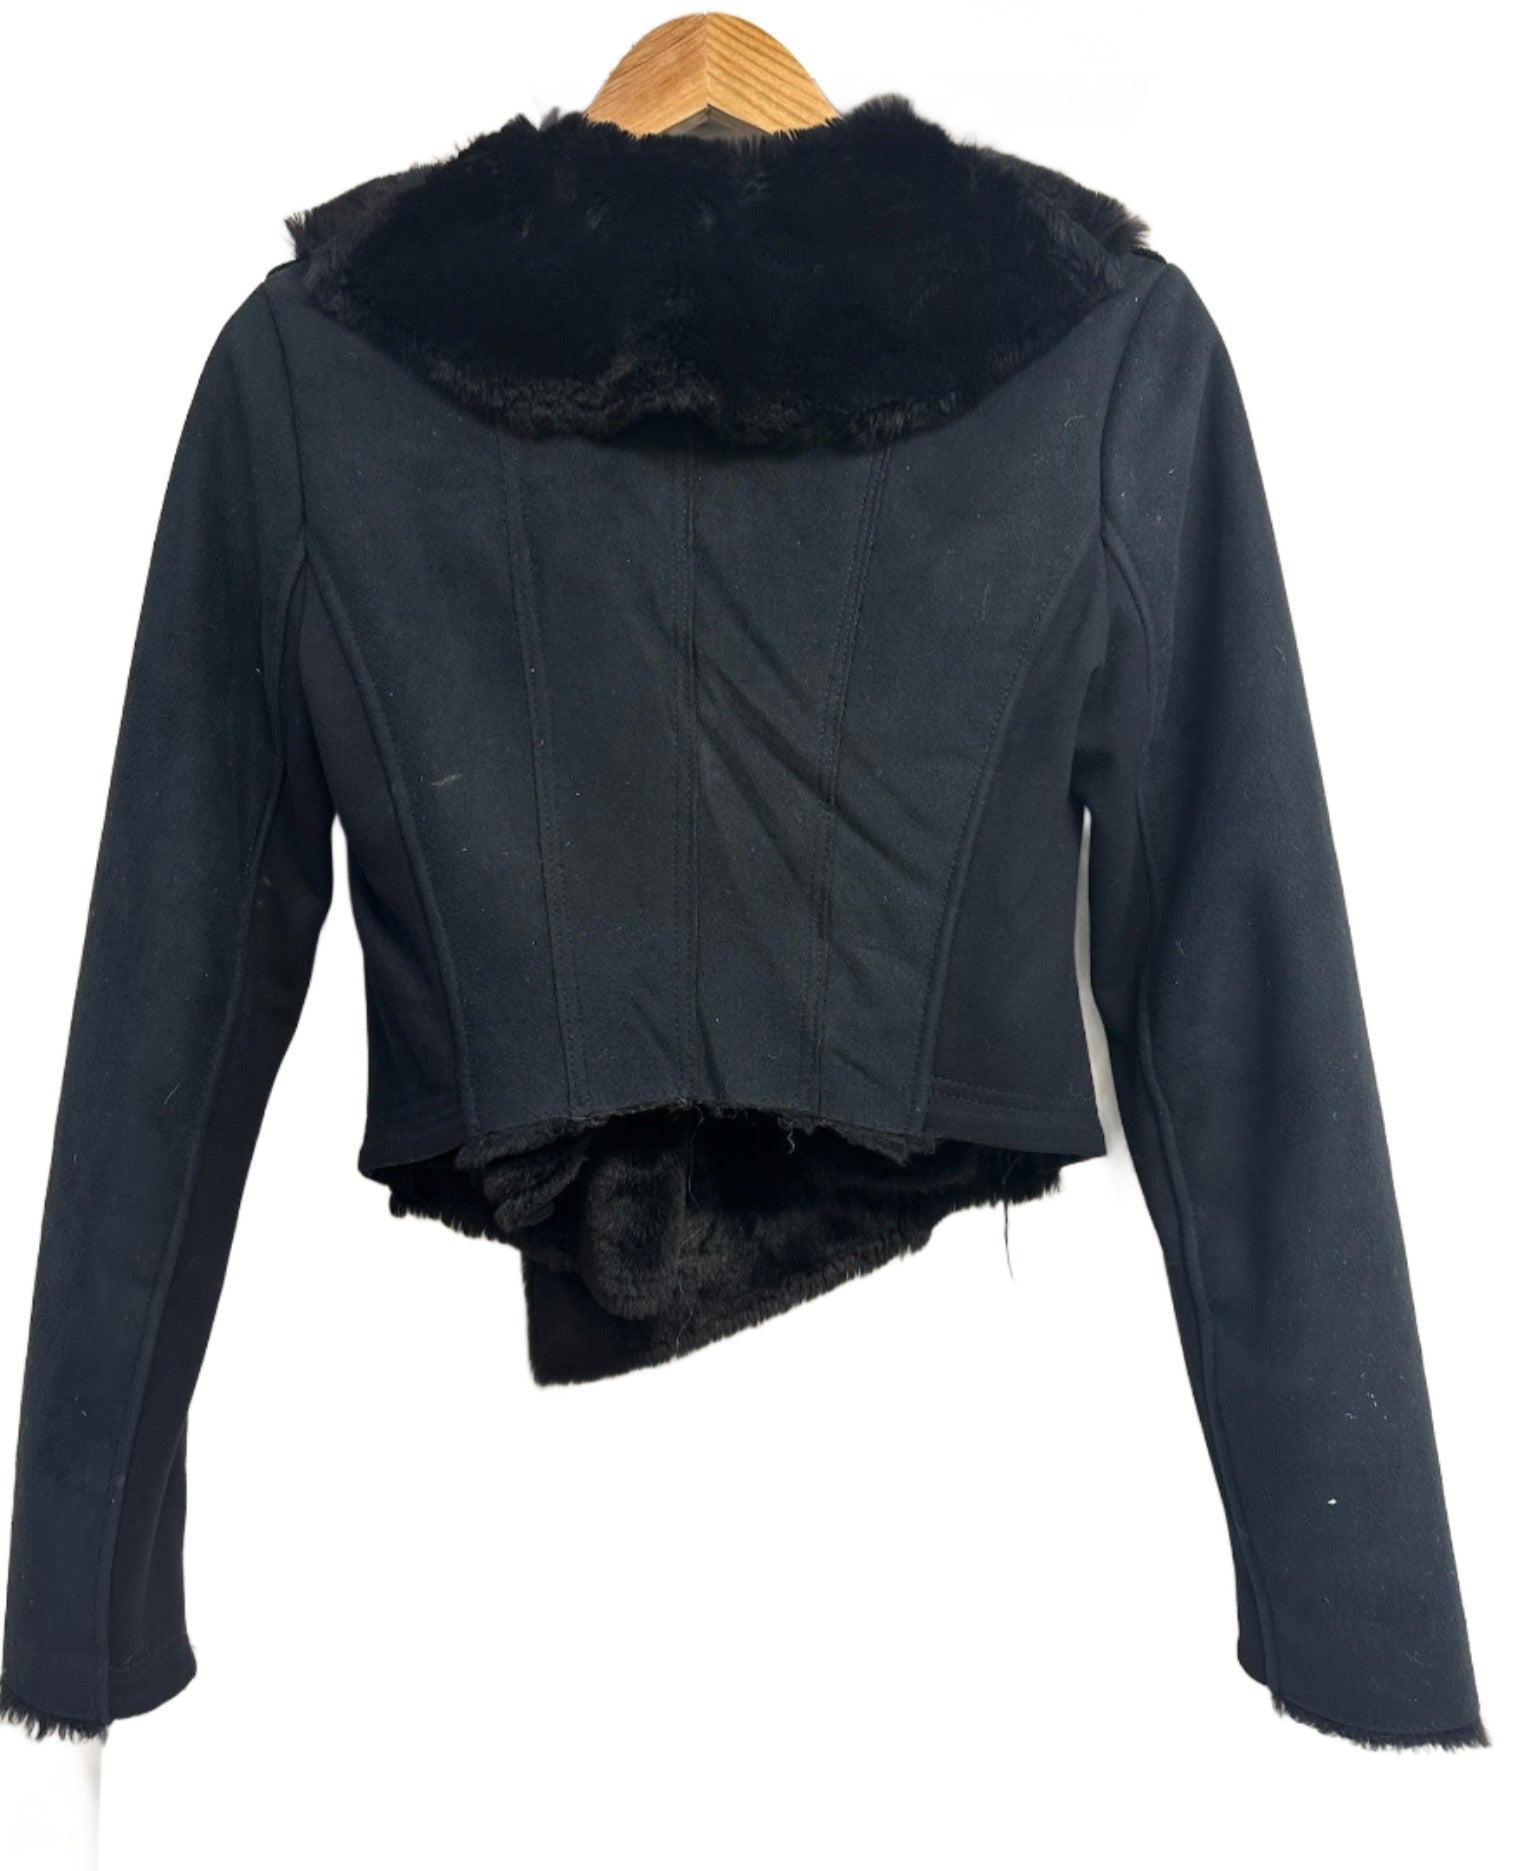 BCBGMAXAZRIA Black Fur Lined Jacket